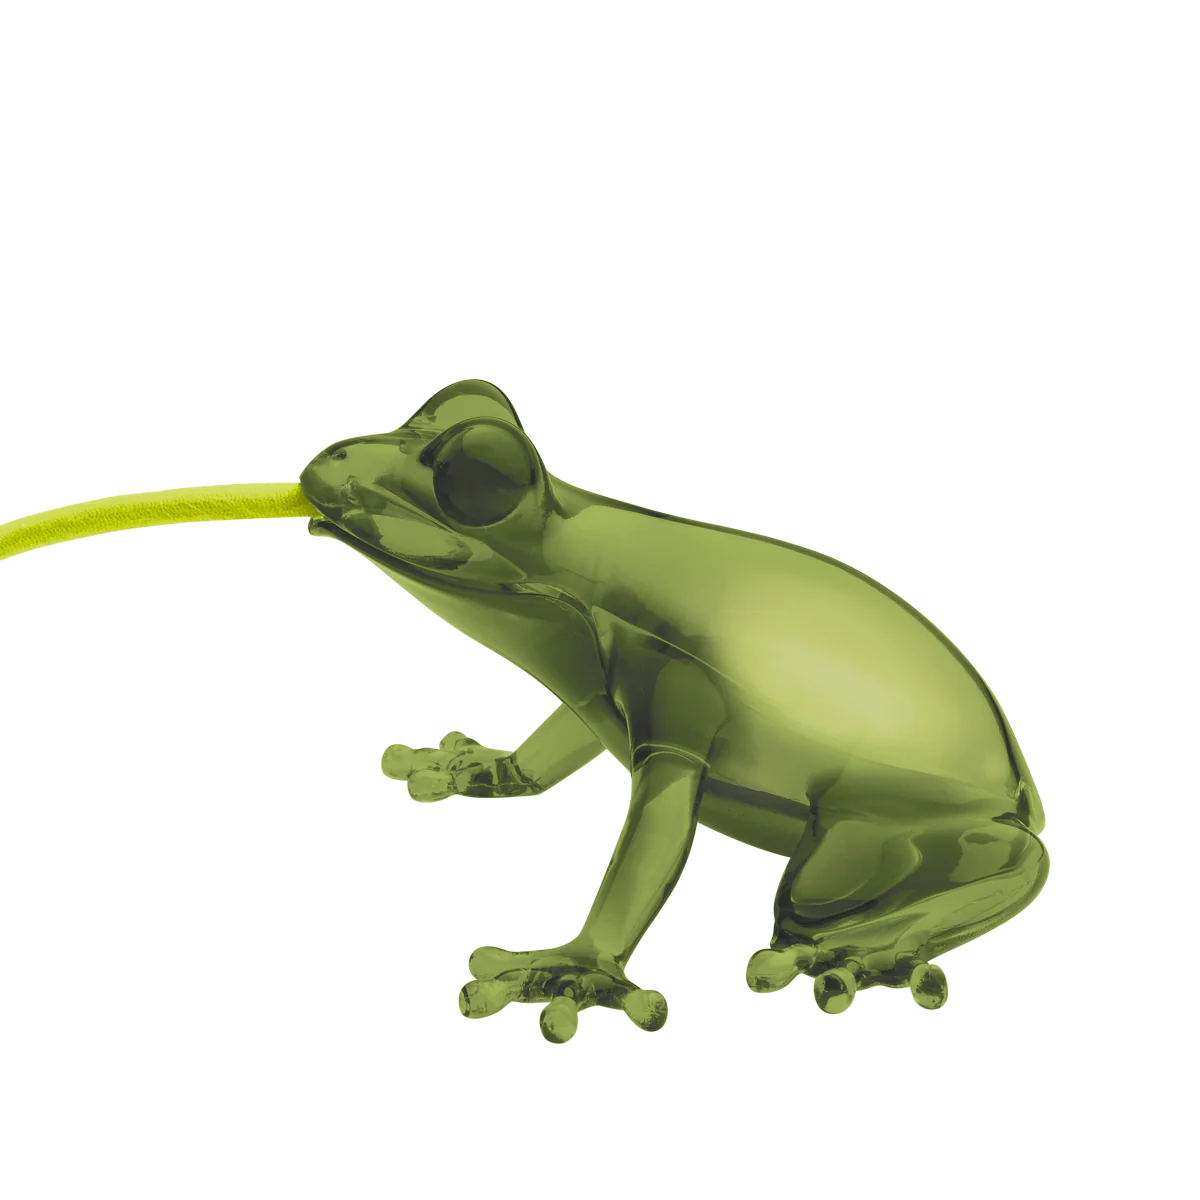 Qeeboo Hungry Frog Lamp